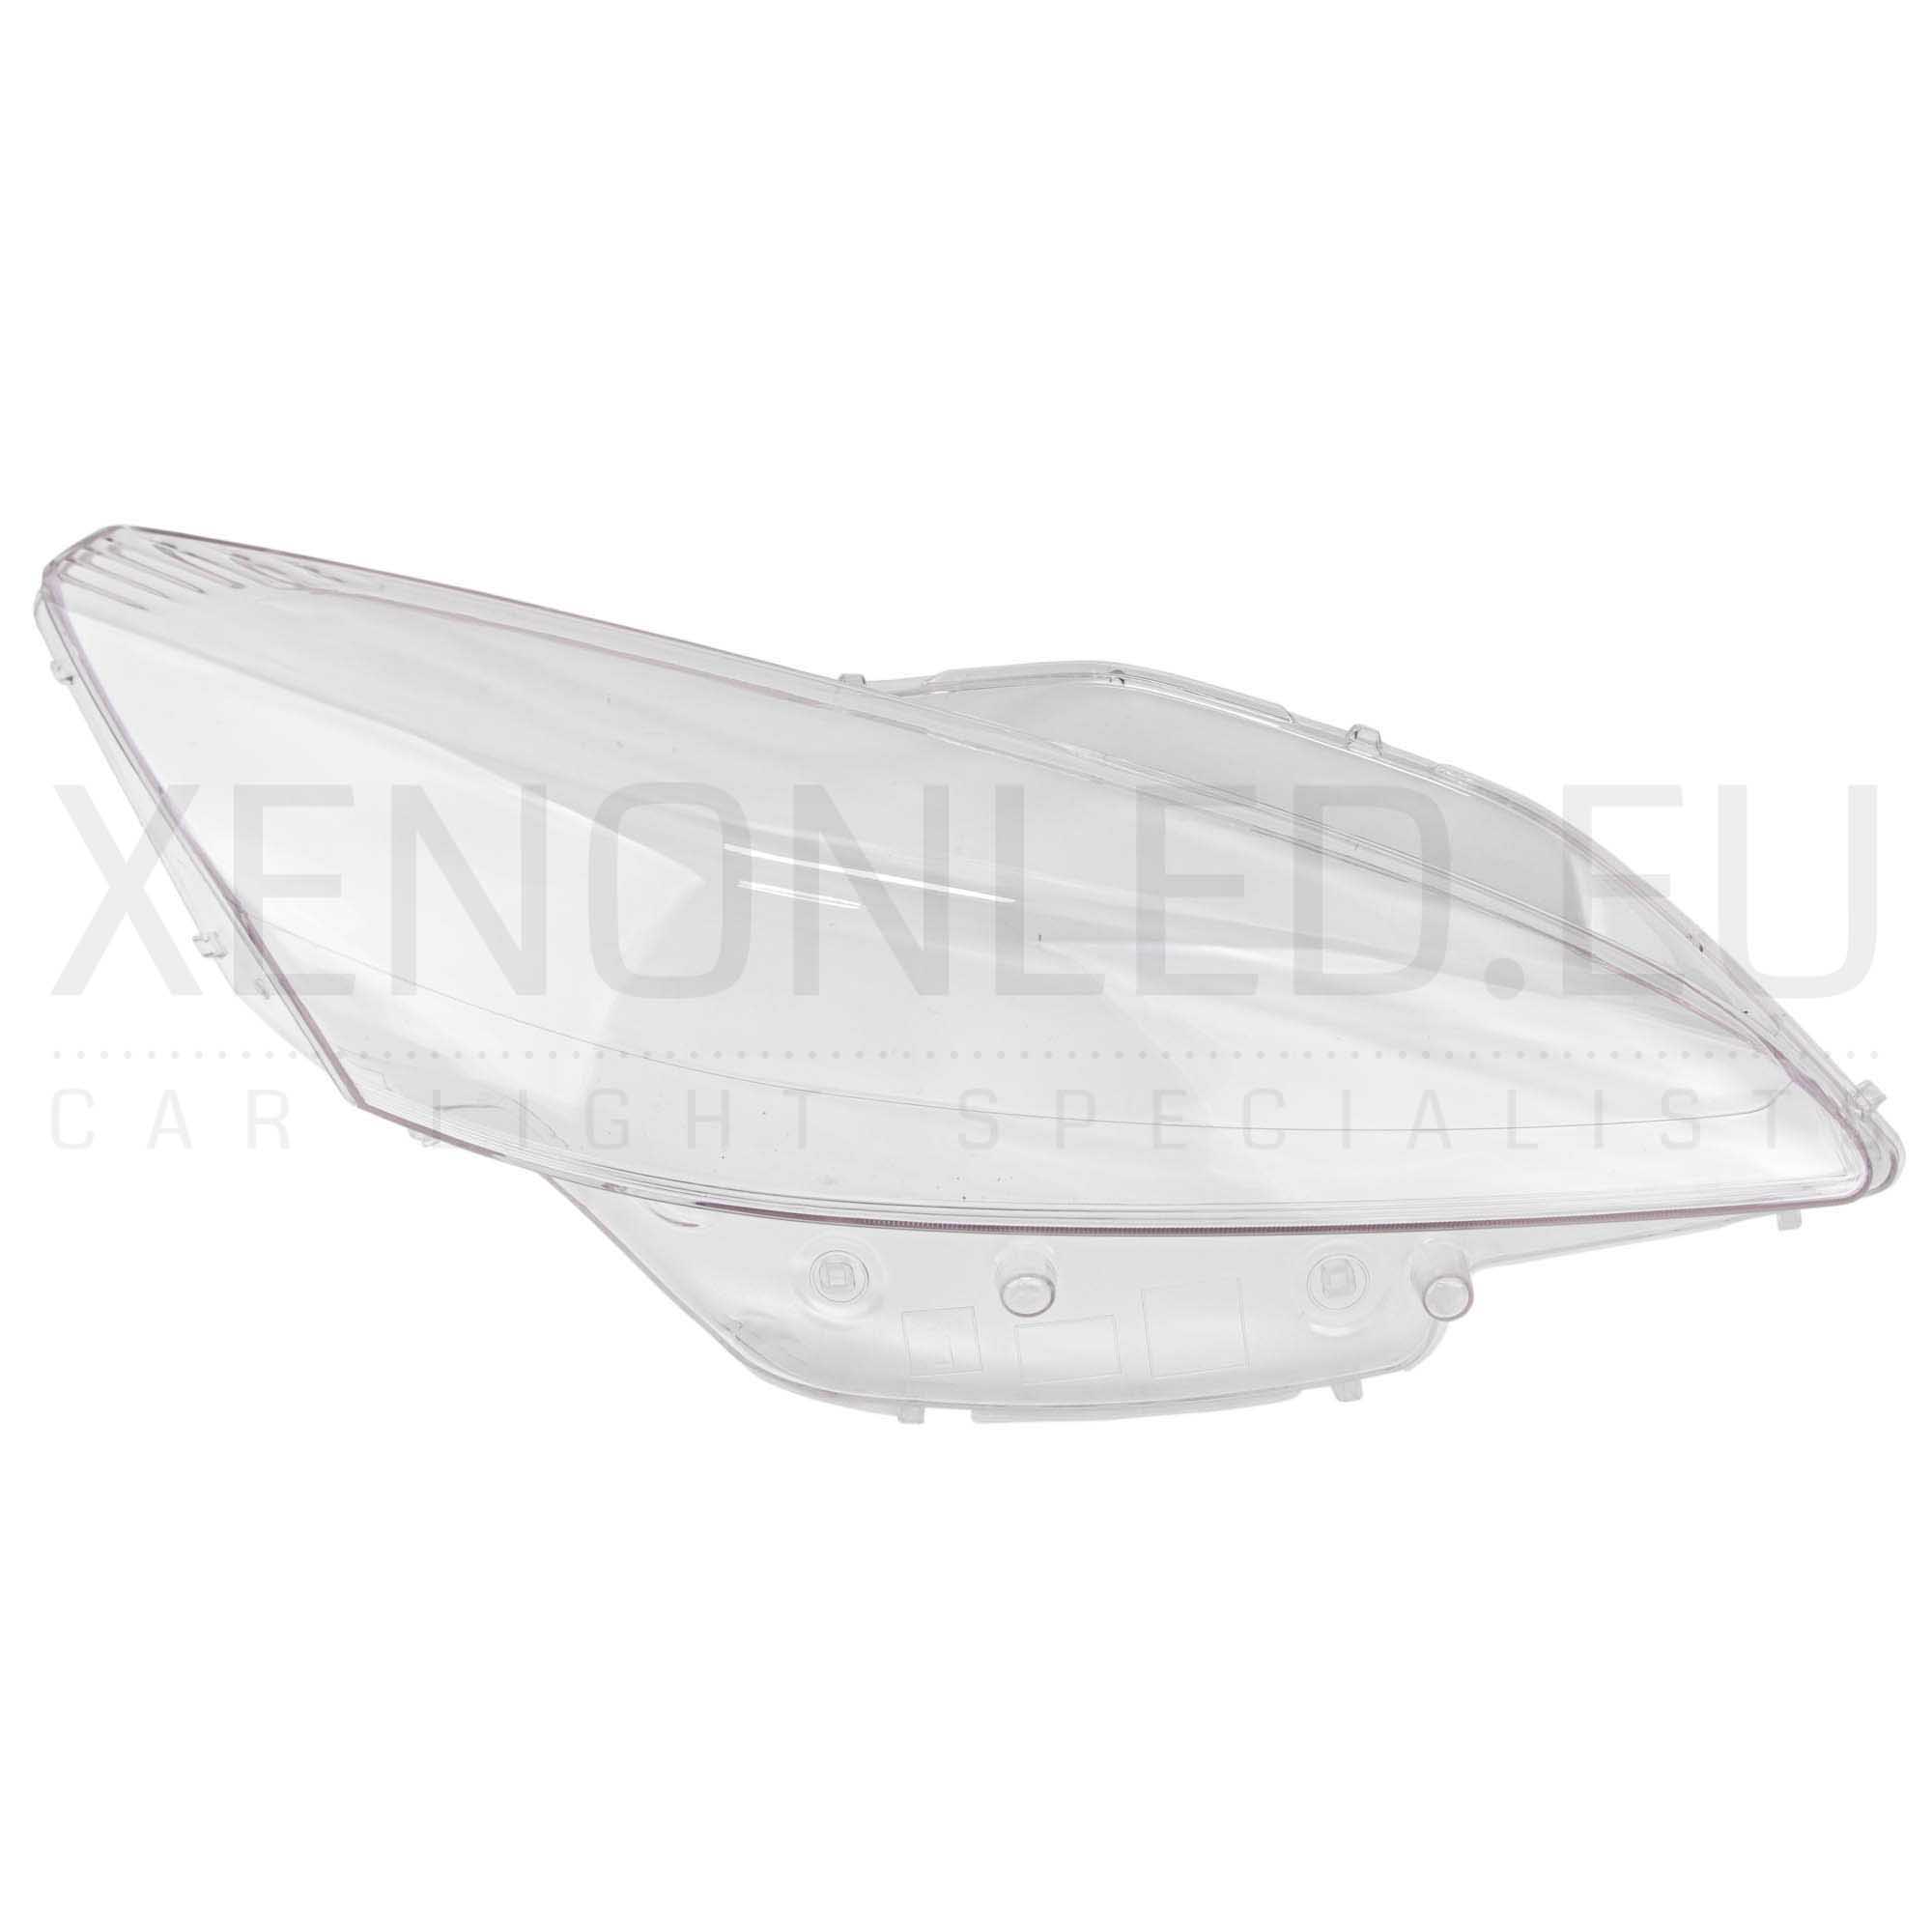 Peugeot 508 2010 - 2014 Headlight Lens Cover Right Side - Xenonled.eu